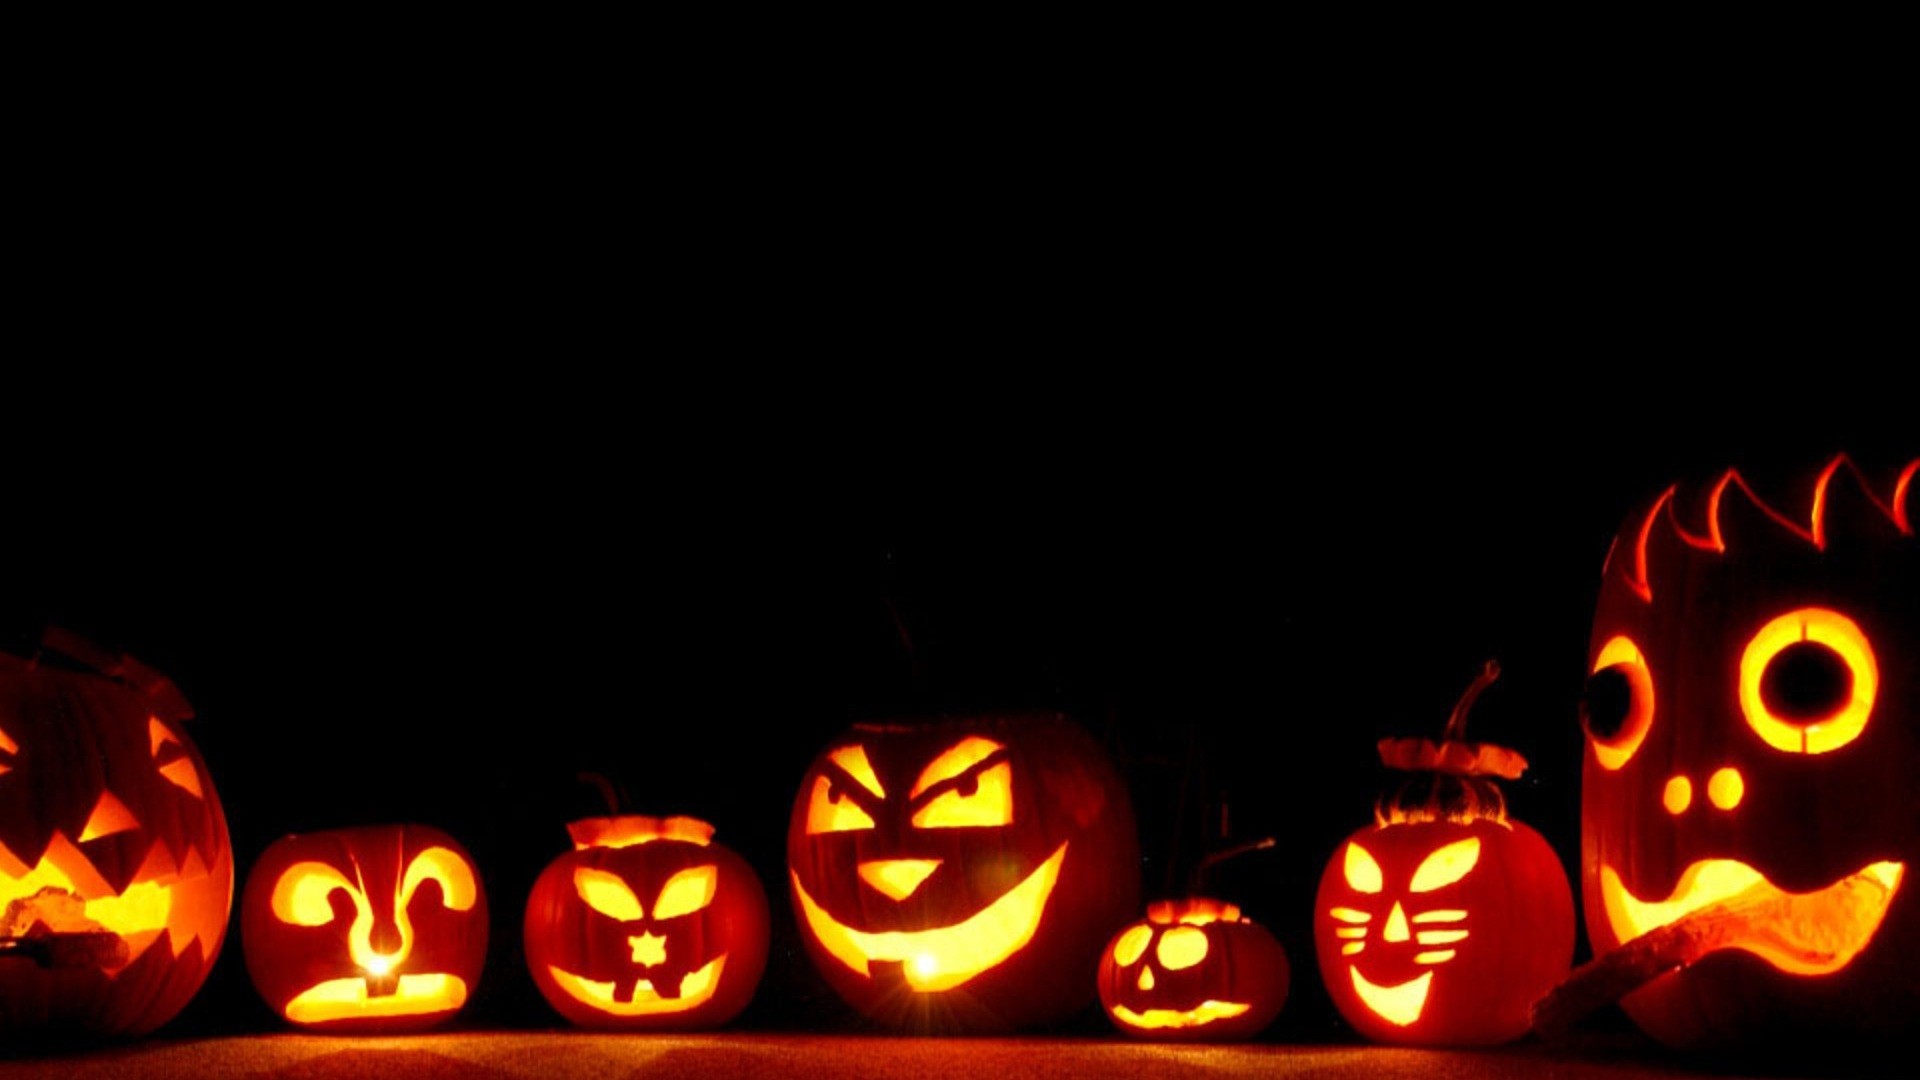 General 1920x1080 Halloween simple background lights creepy pumpkin